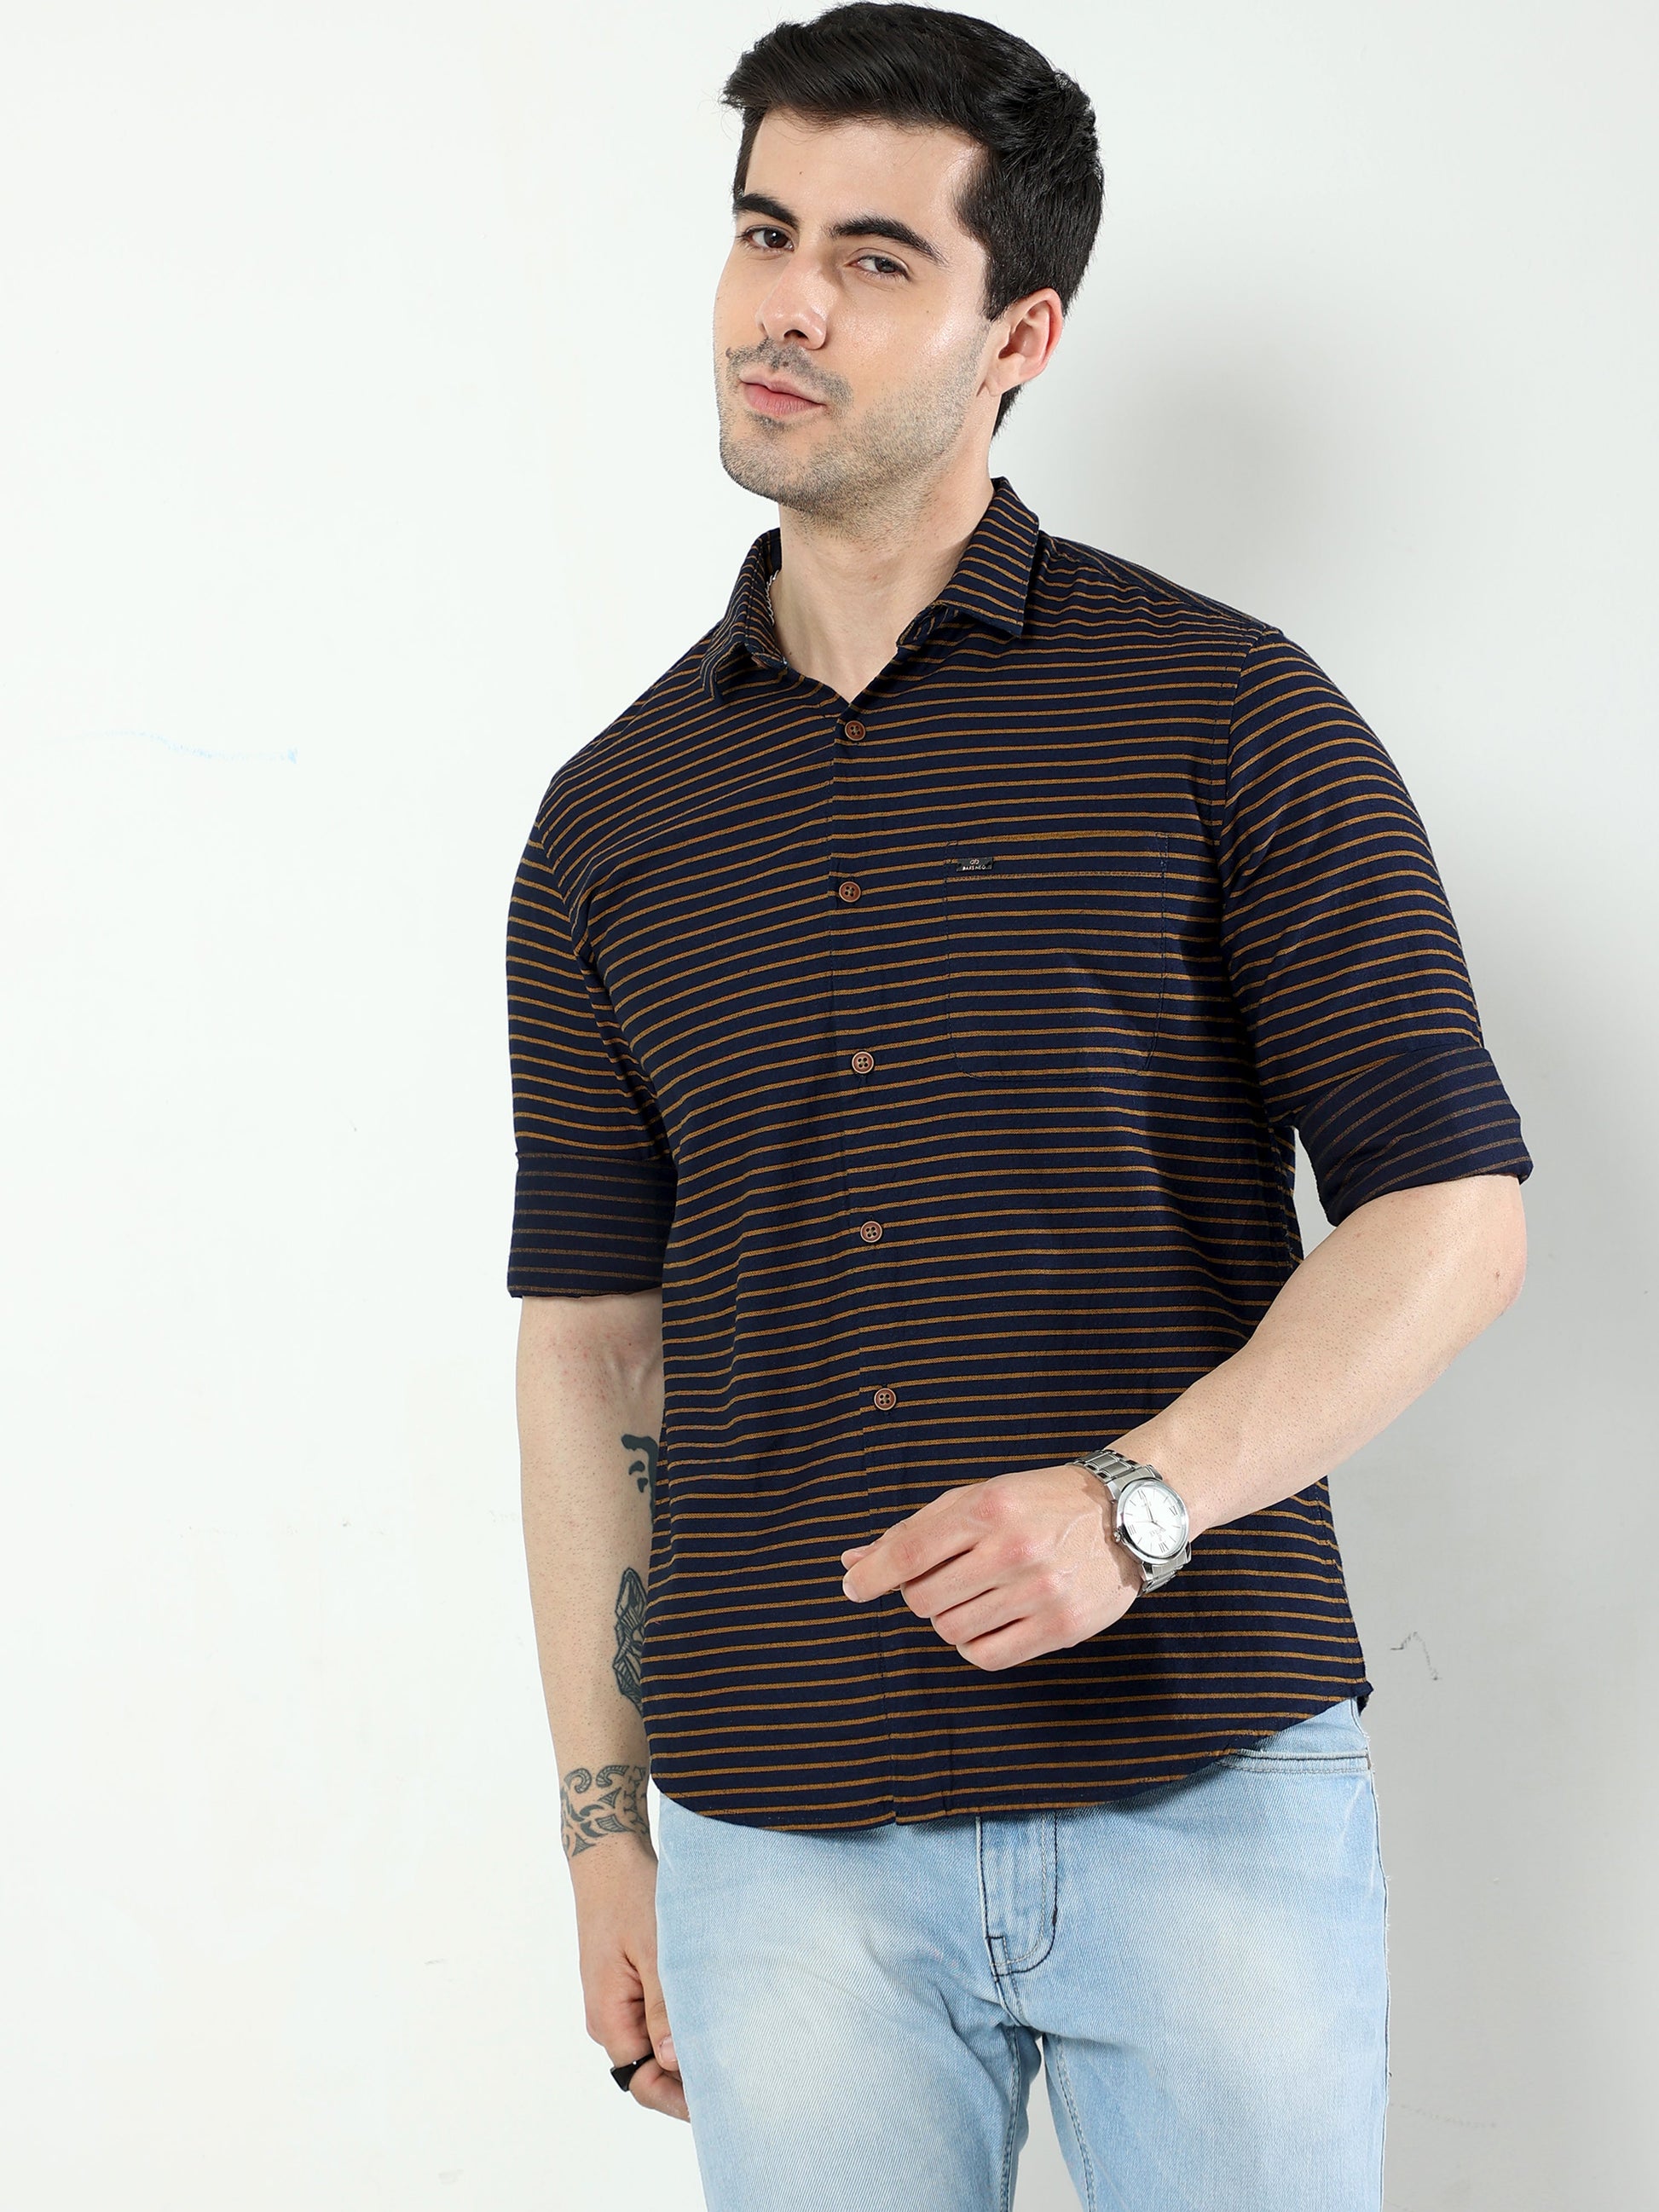 Brown Stripe Full Sleeve Shirt